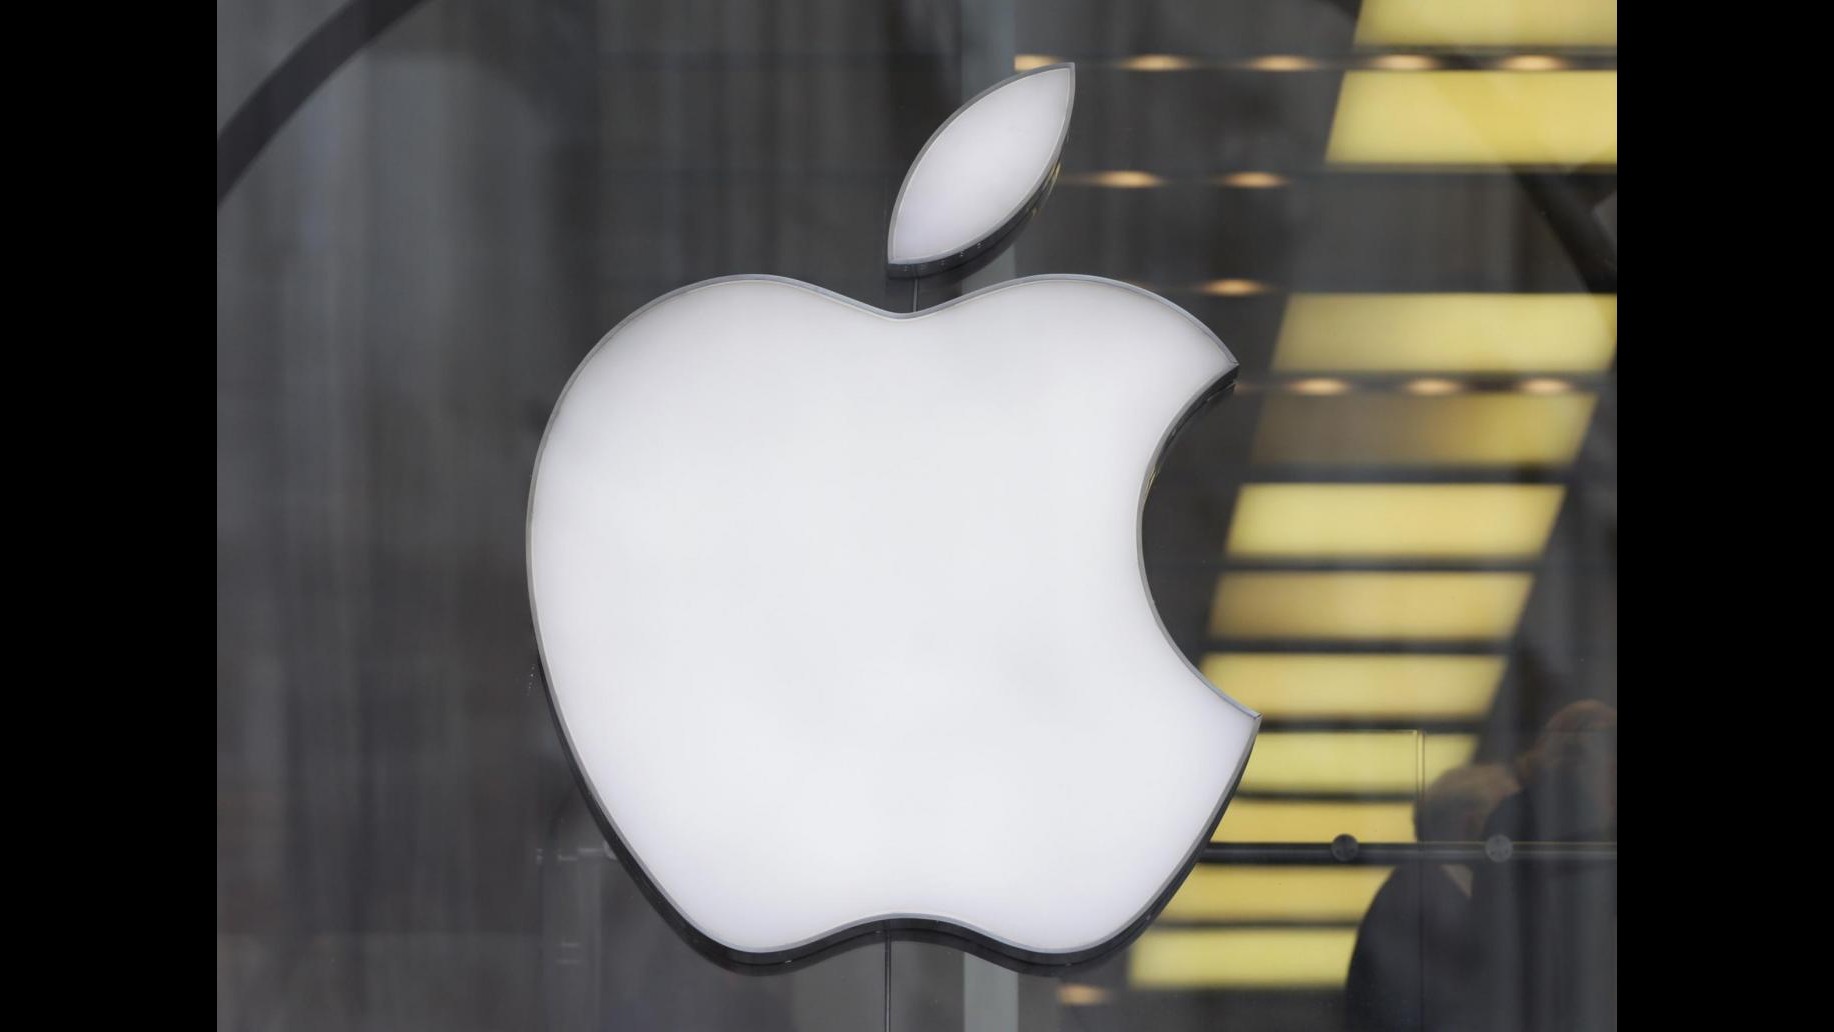 Apple in calo a Wall Street, timori su domanda nuovo iPhone 6s